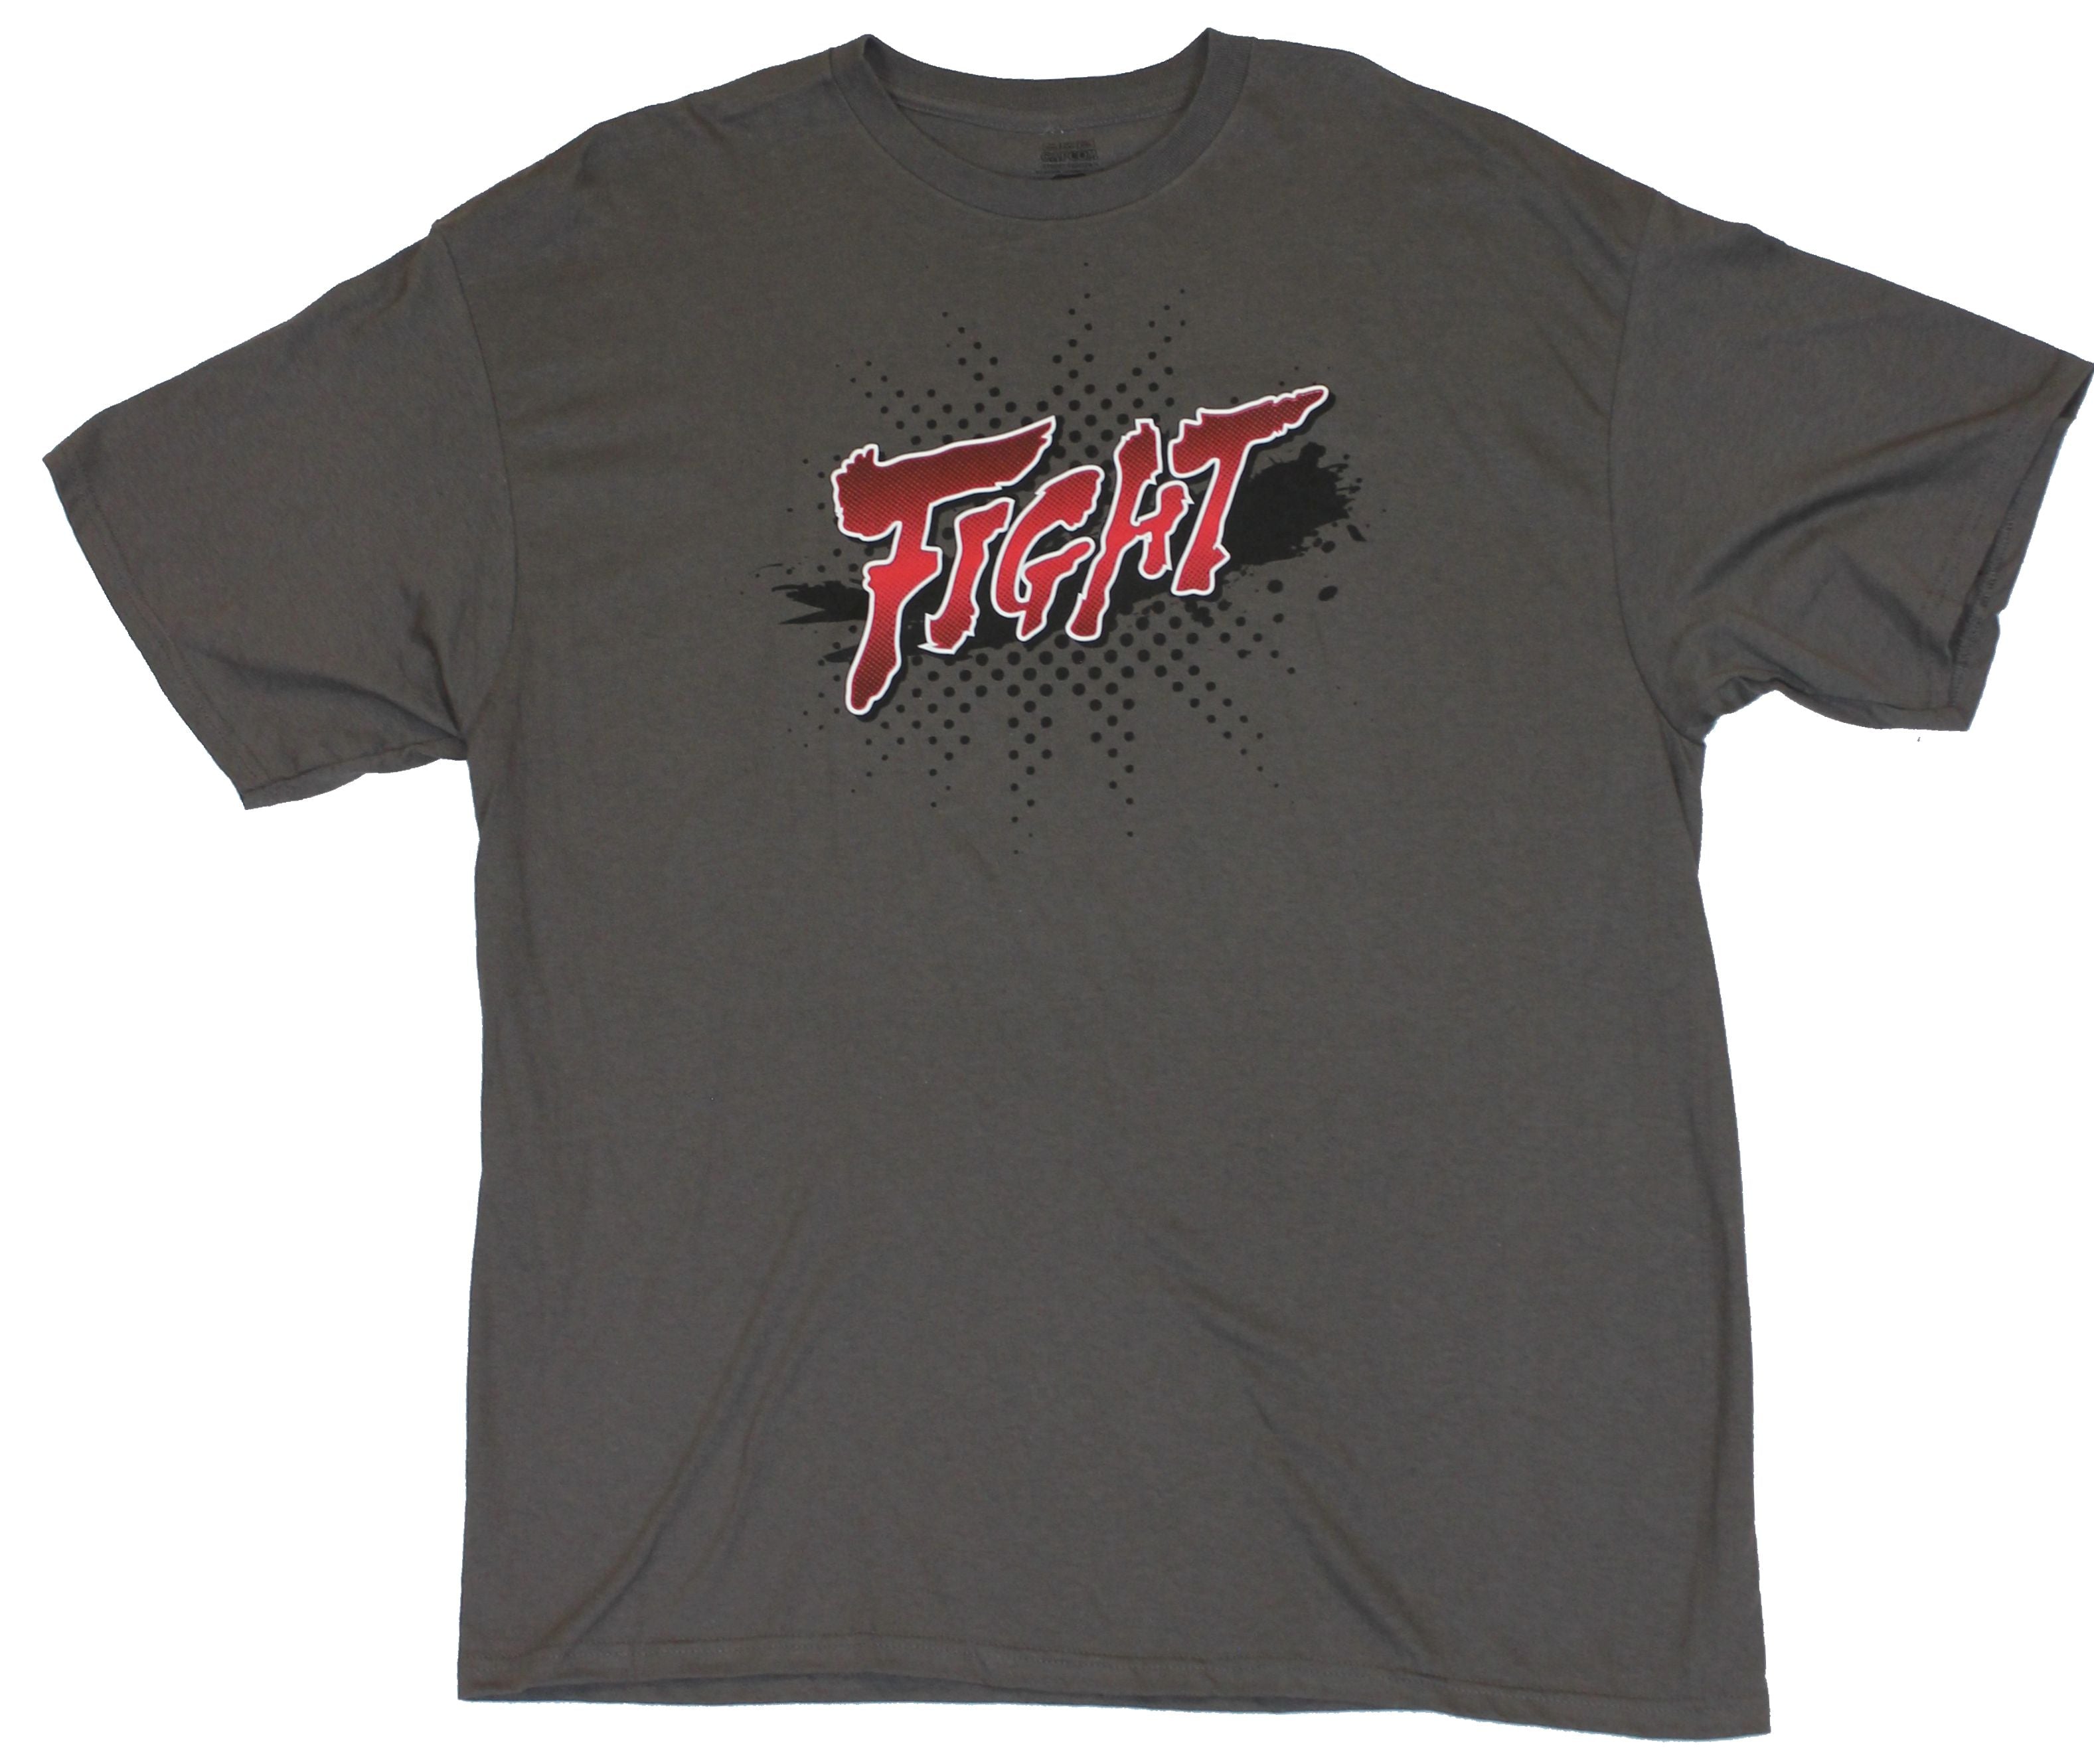 Street Fighter (Capcom) Mens T-Shirt - "Fight!" Slashing Round Starting Logo